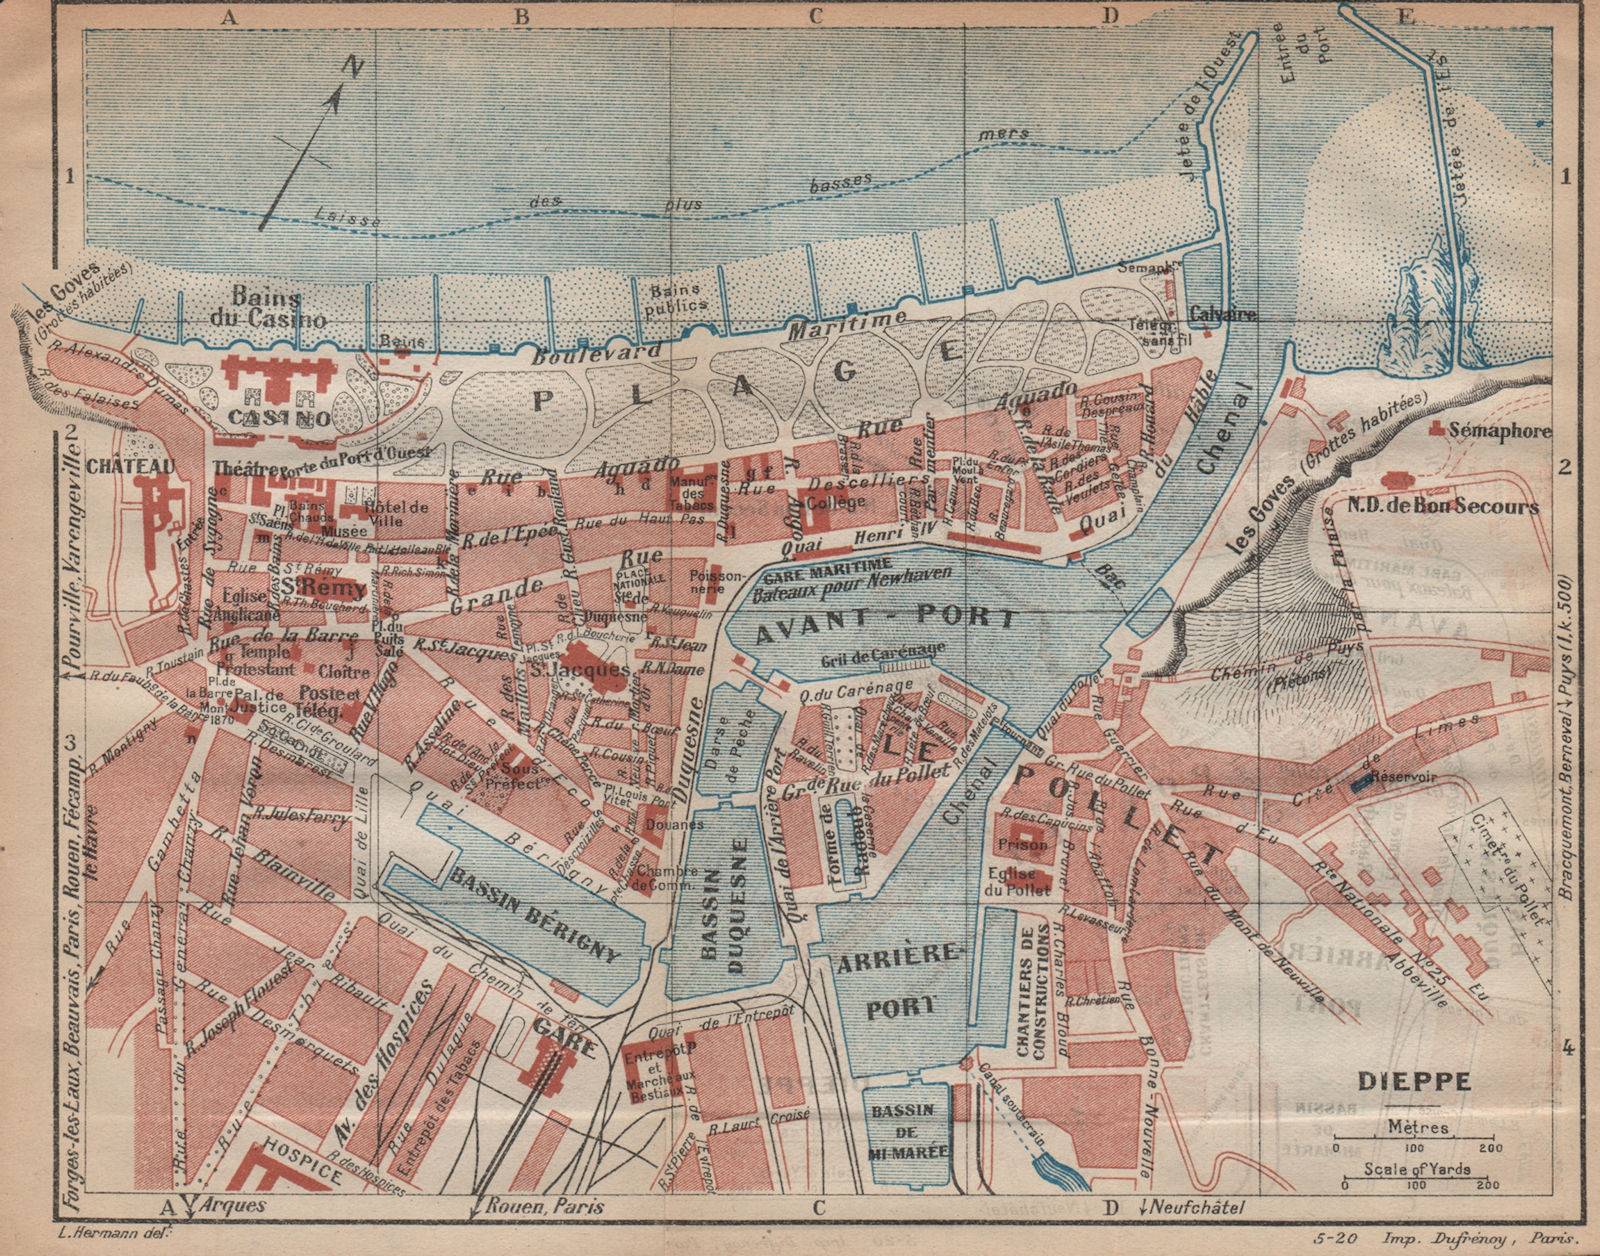 Associate Product DIEPPE. Vintage town city map plan. Seine-Maritime 1920 old antique chart